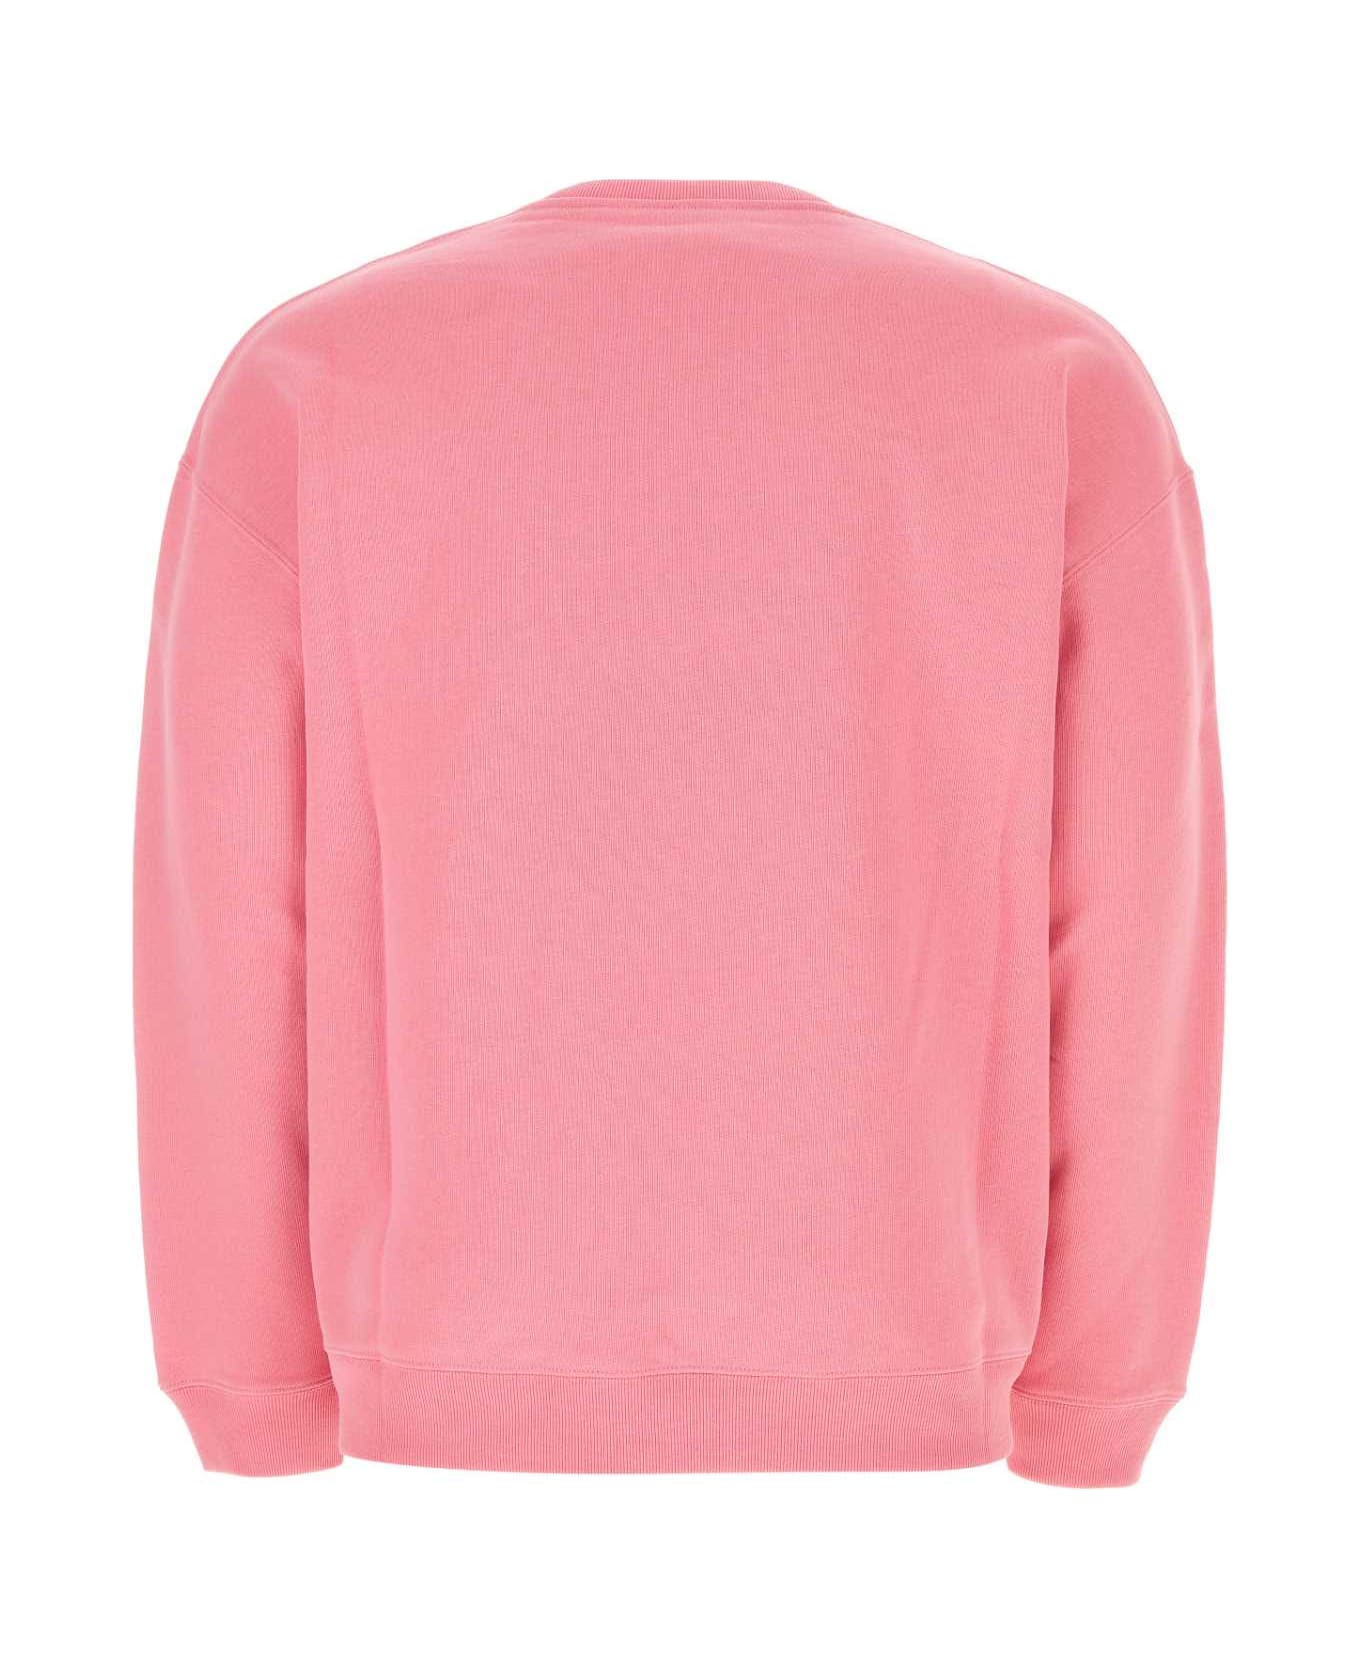 Loewe Pink Cotton Sweatshirt - CANDY